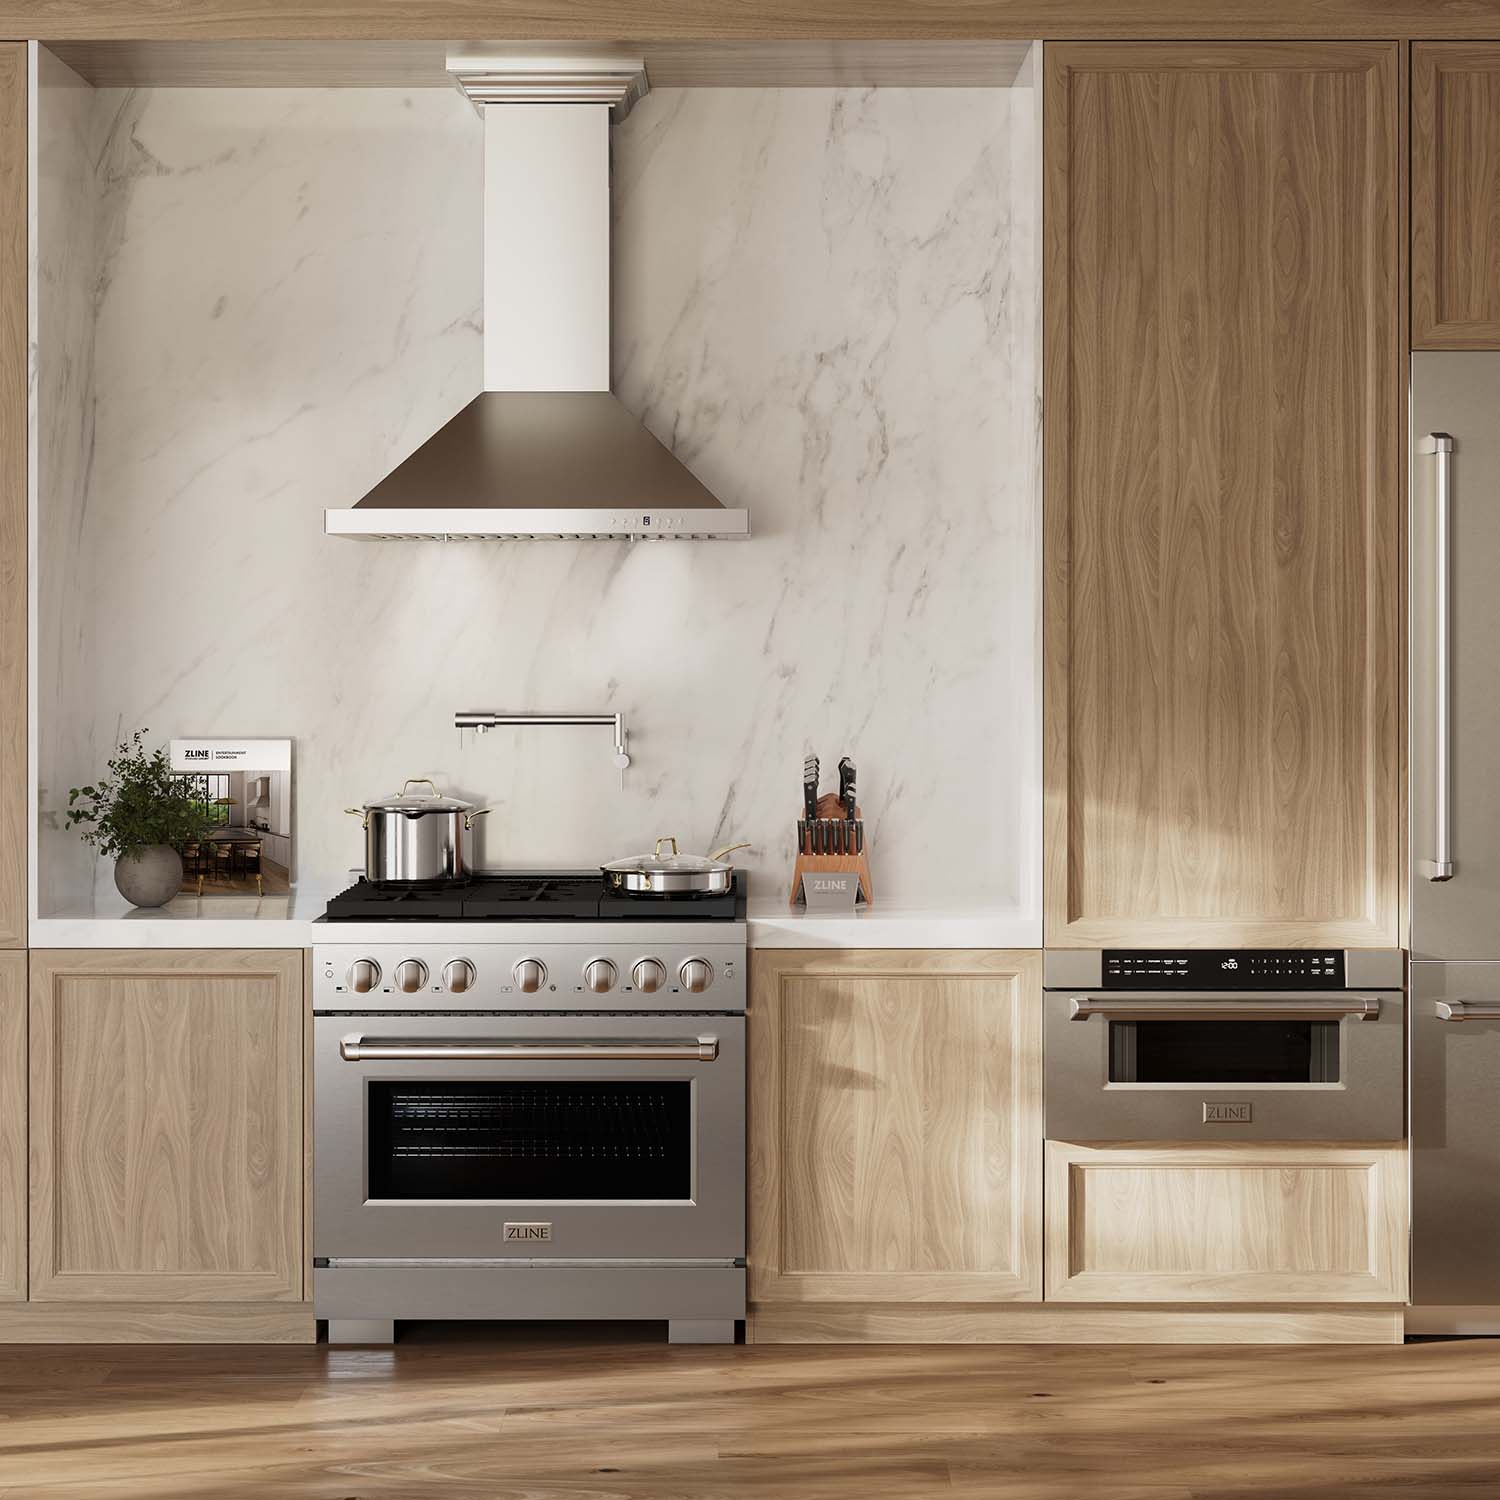 ZLINE 36" Stainless Steel Gas Range in luxury kitchen wide angle.